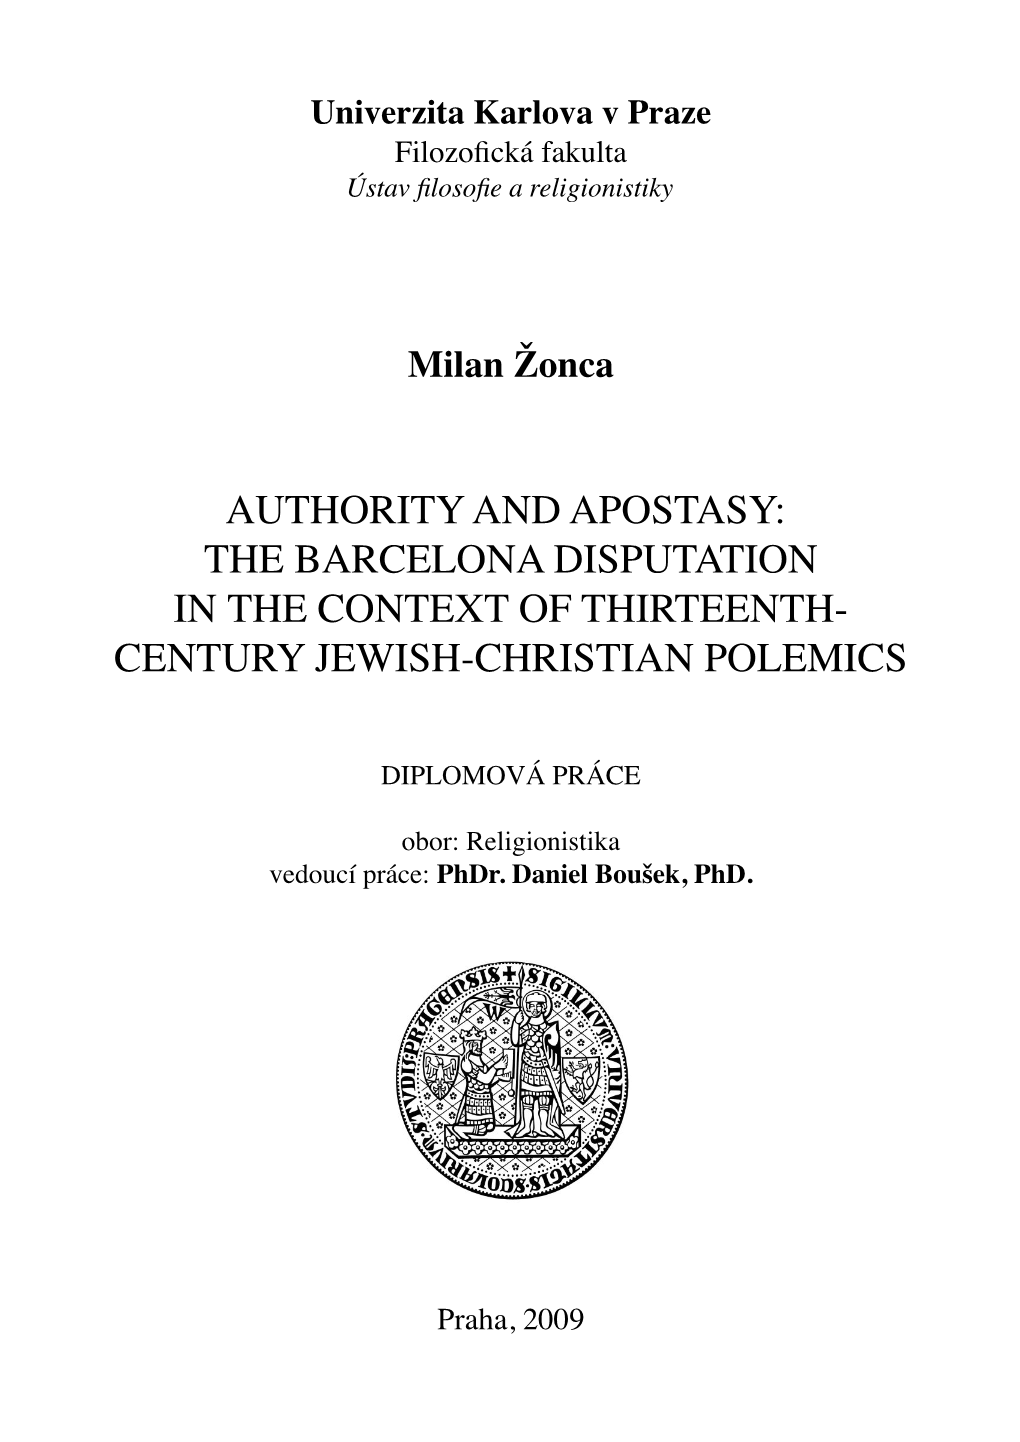 Century Jewish-Christian Polemics